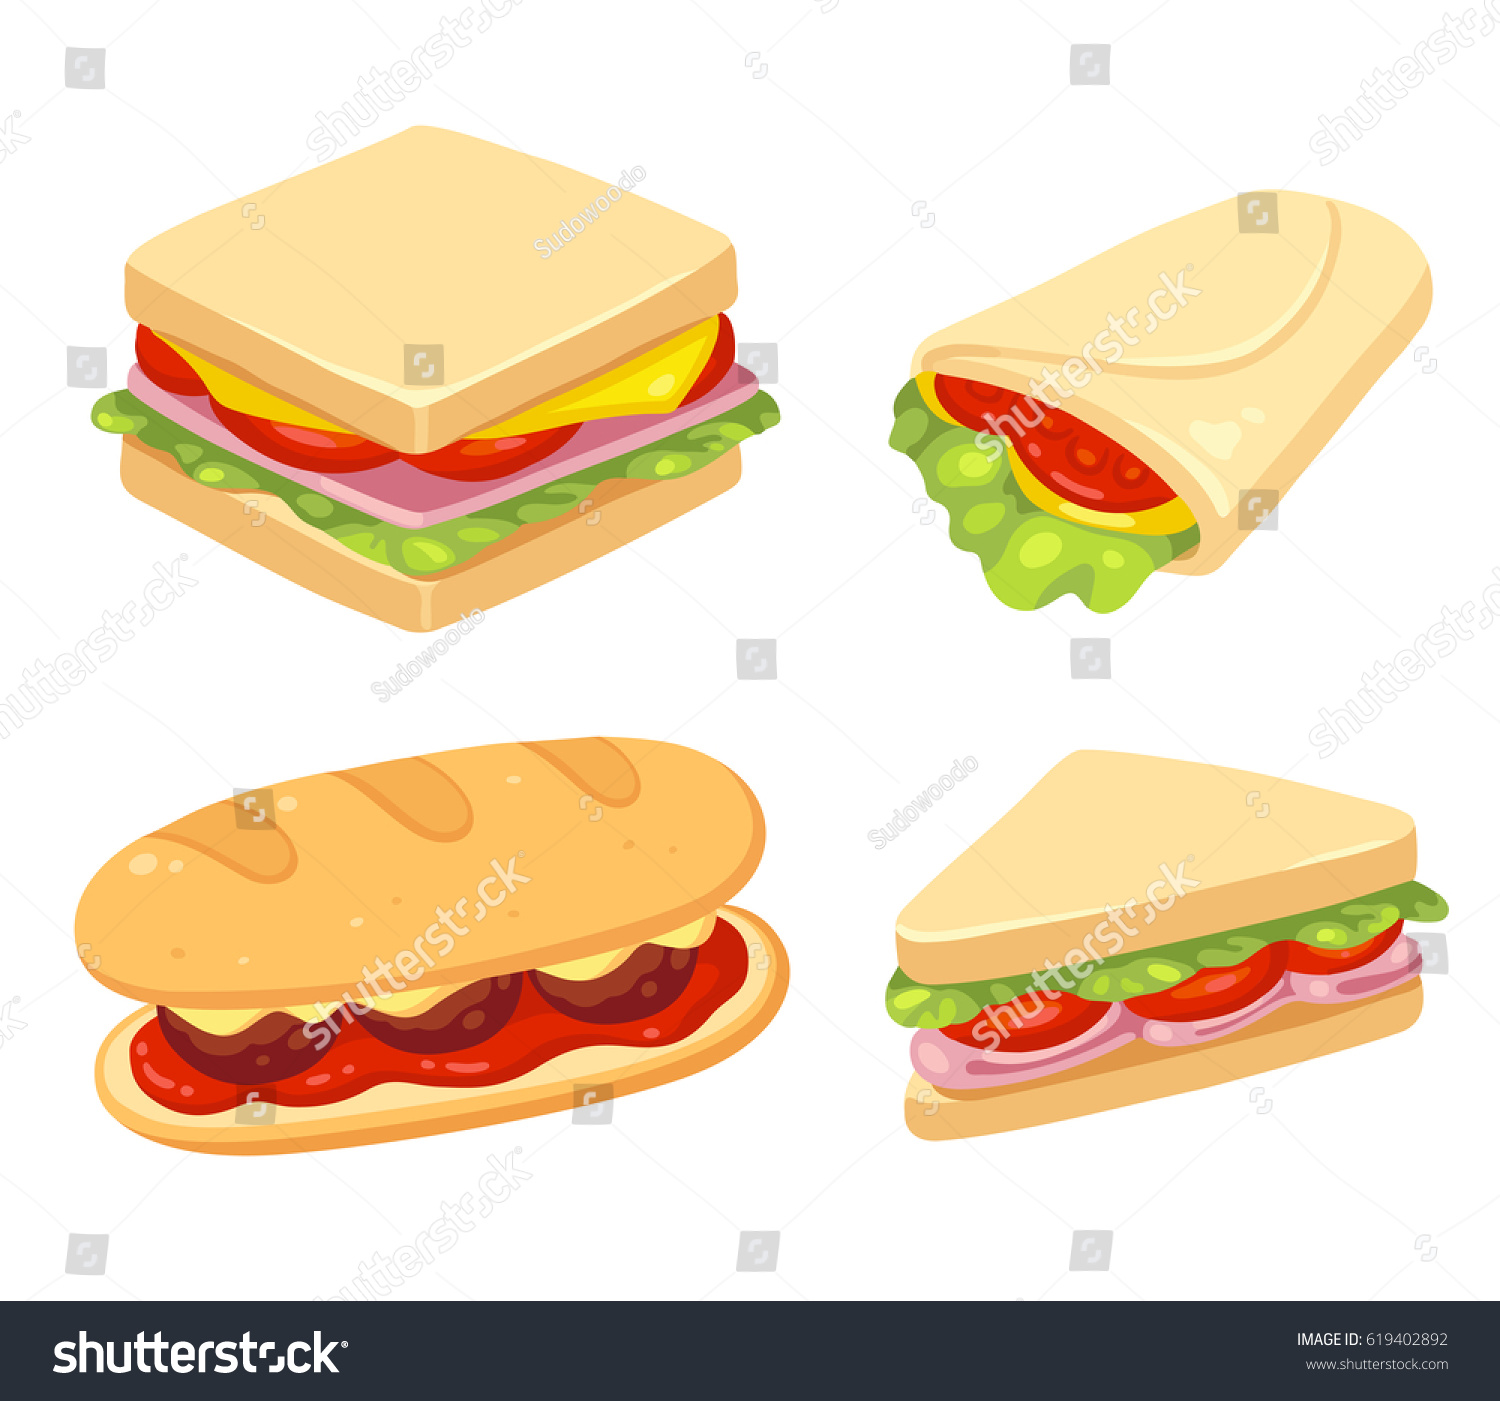 Панини бутерброд наклейки